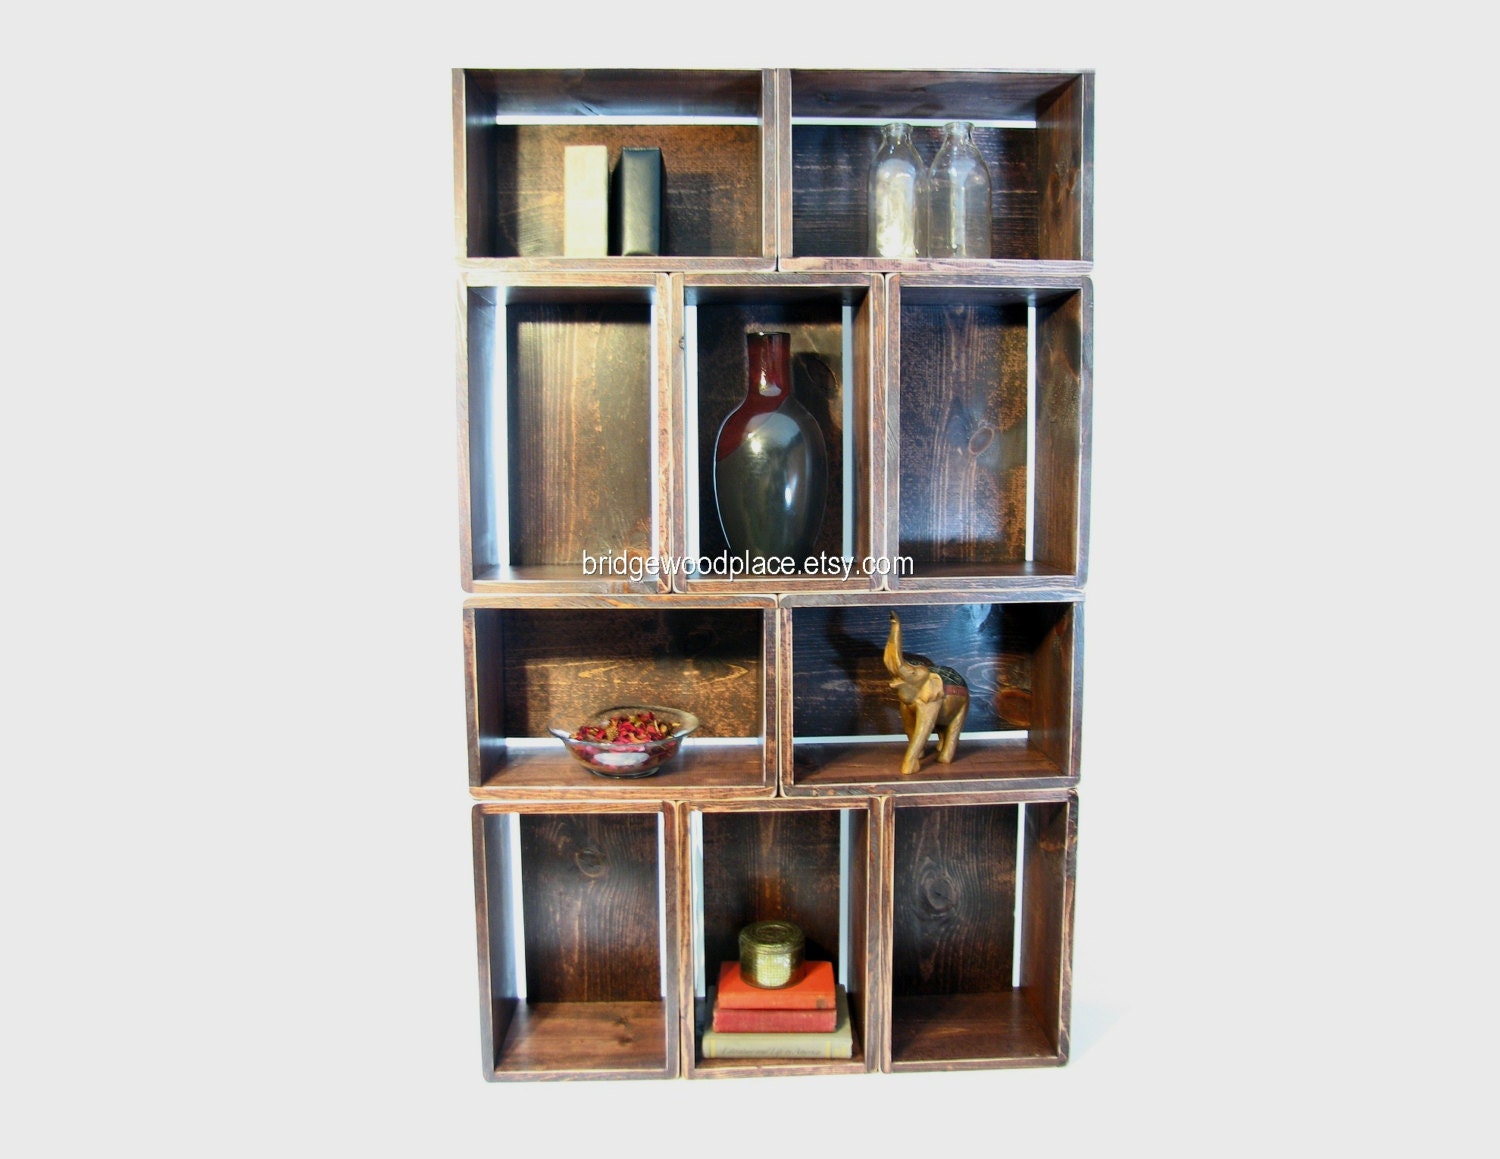 Bookcase Wooden Crate Furniture Bookshelf by BridgewoodPlace